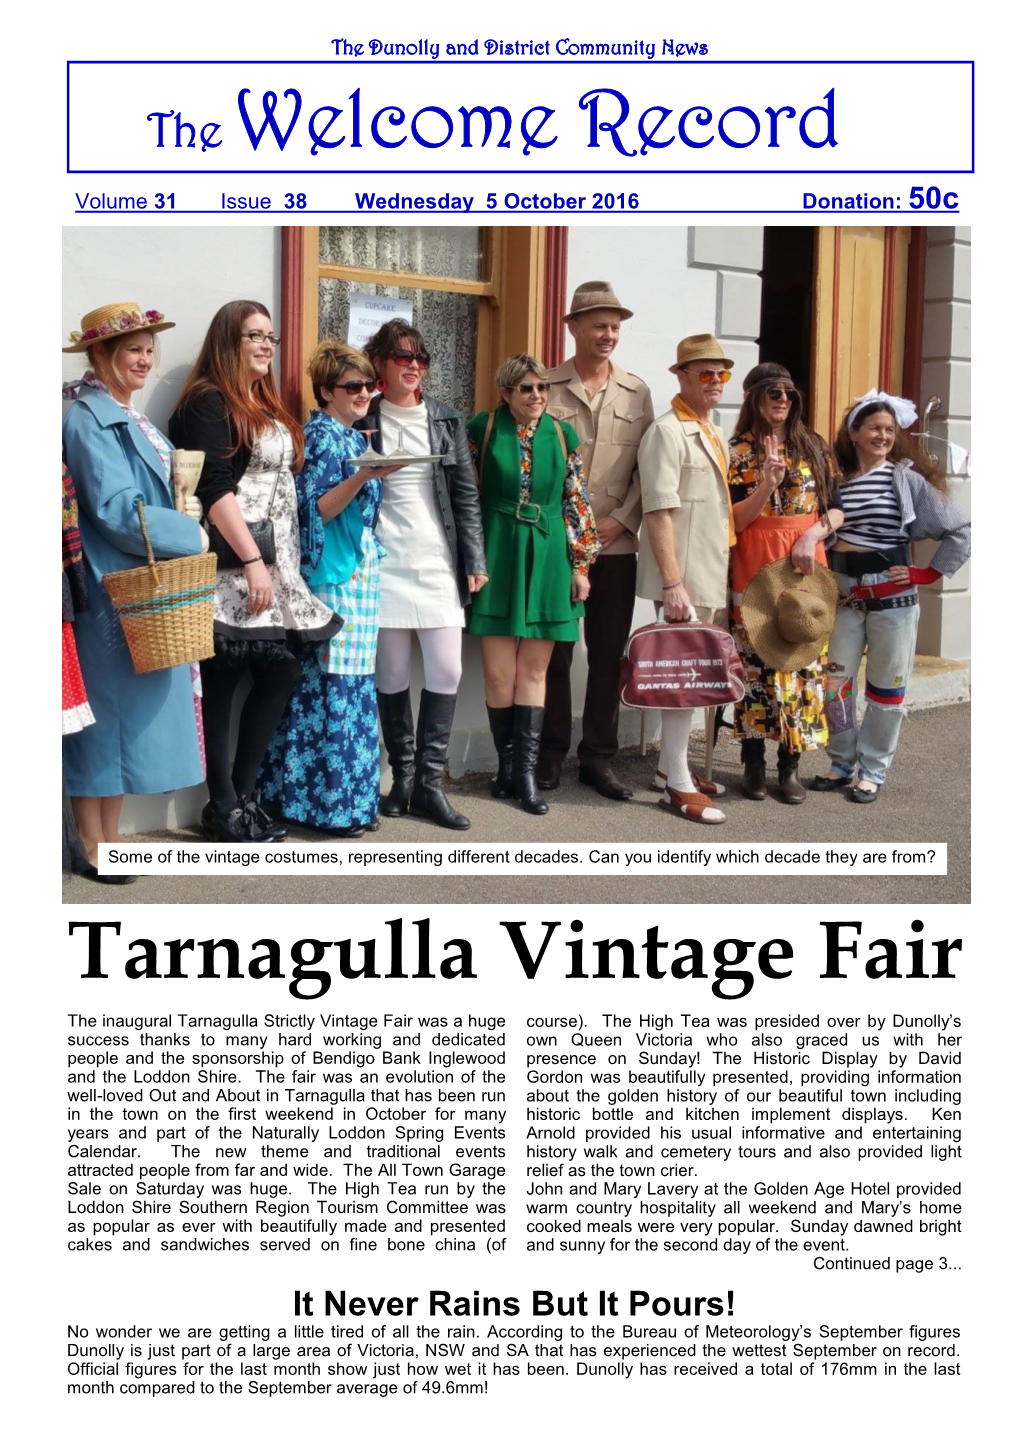 The Welcome Record Tarnagulla Vintage Fair